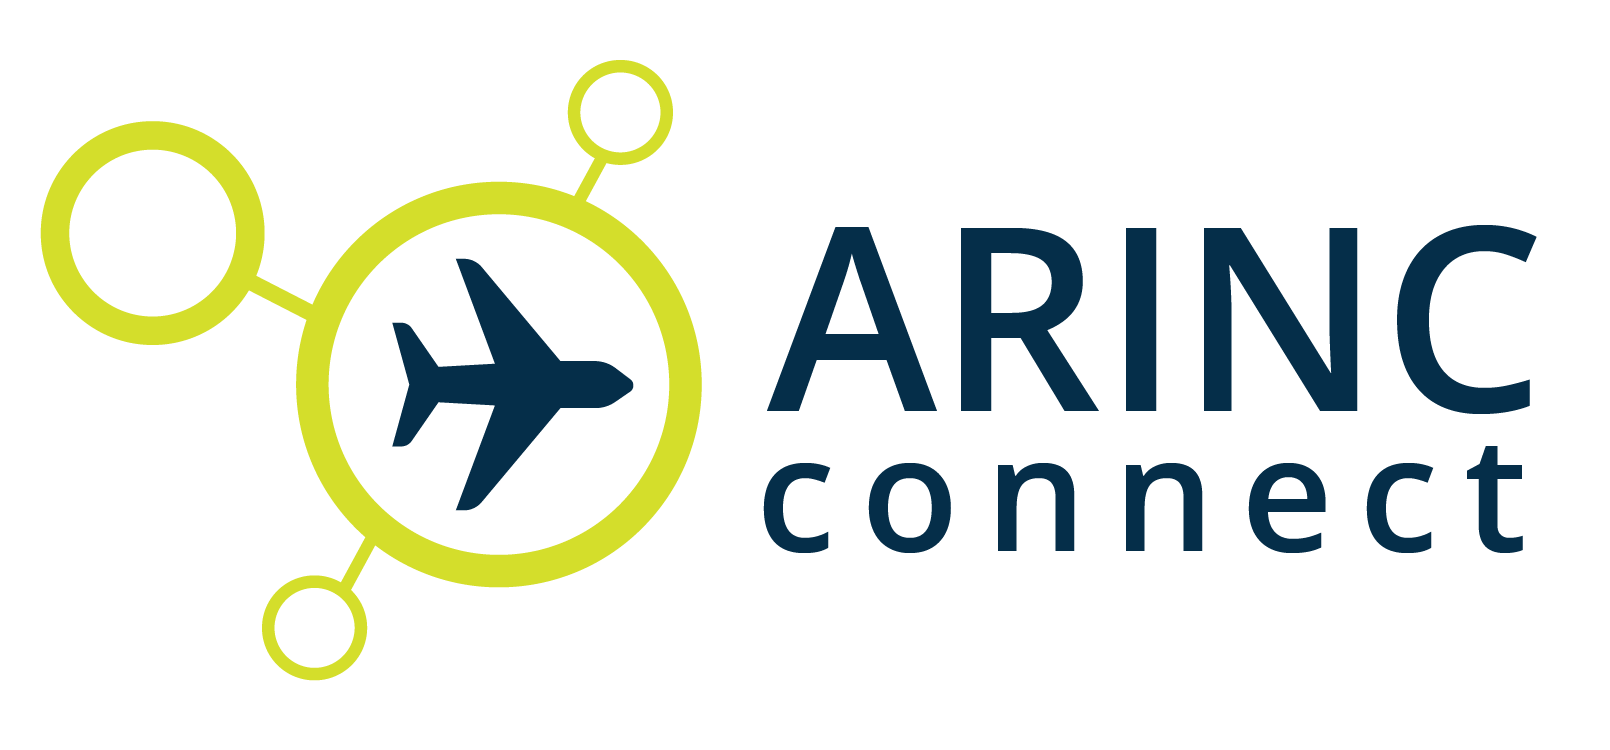 ARINC Logo